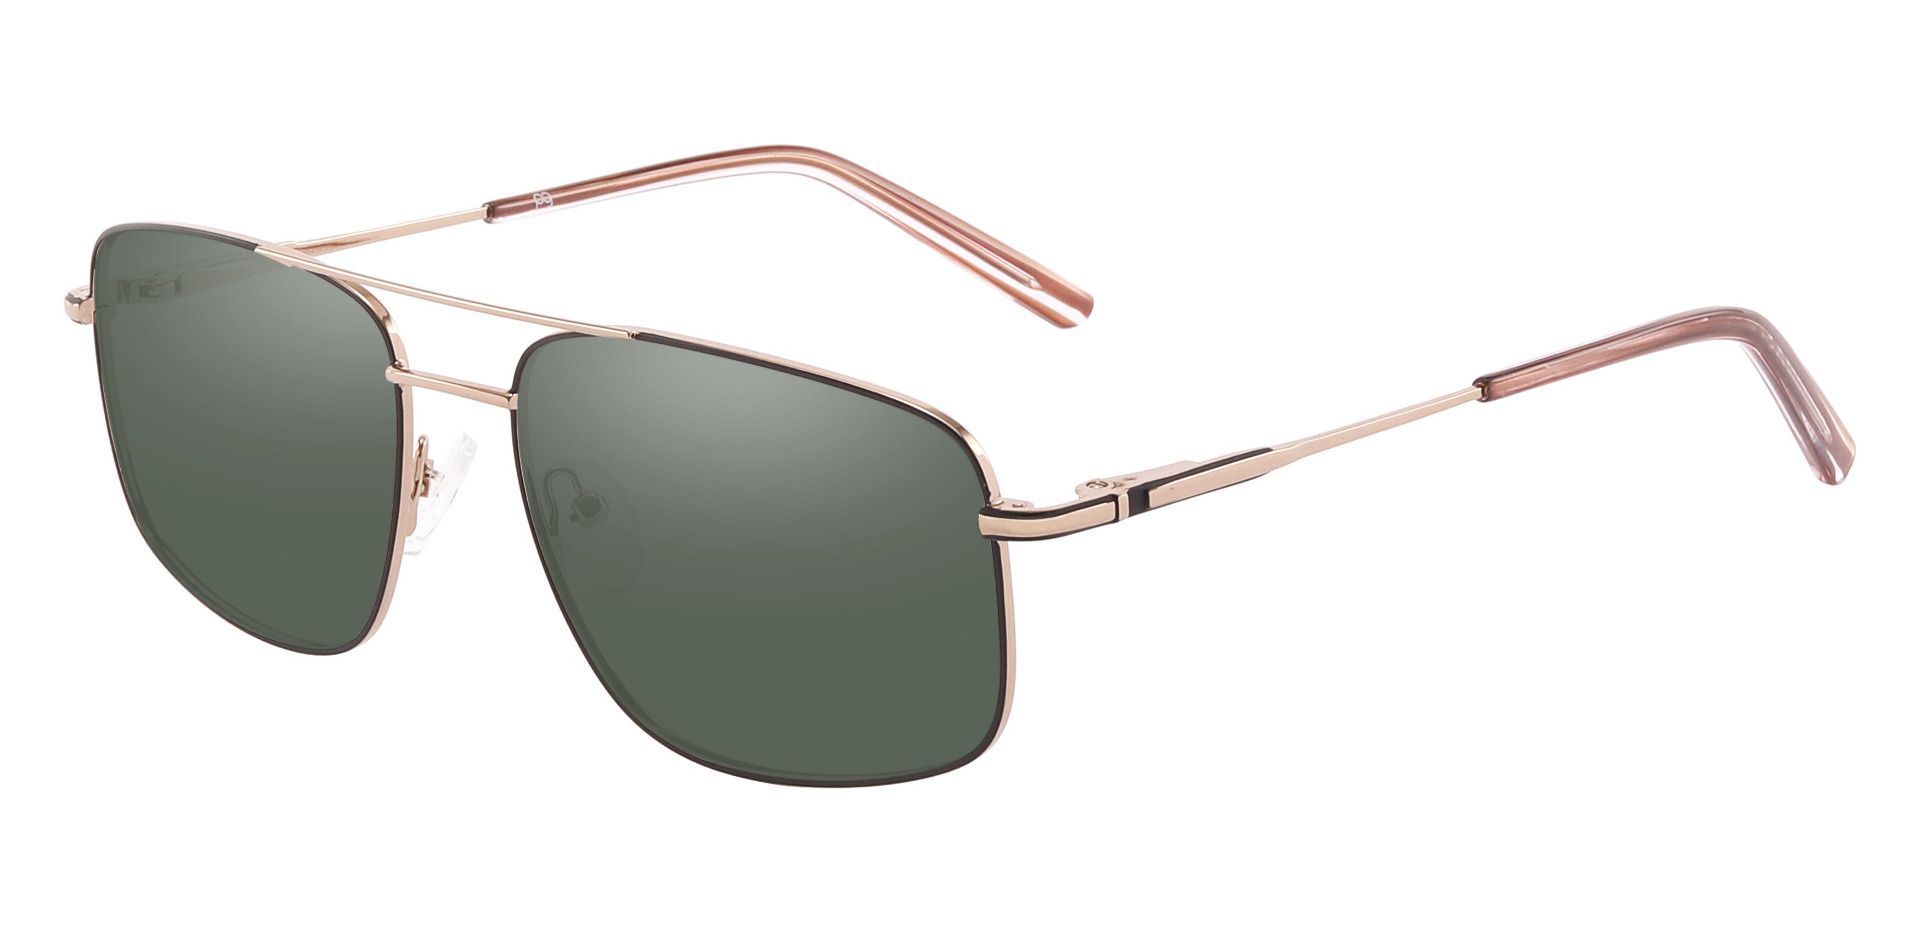 Turner Aviator Lined Bifocal Sunglasses - Gold Frame With Green Lenses